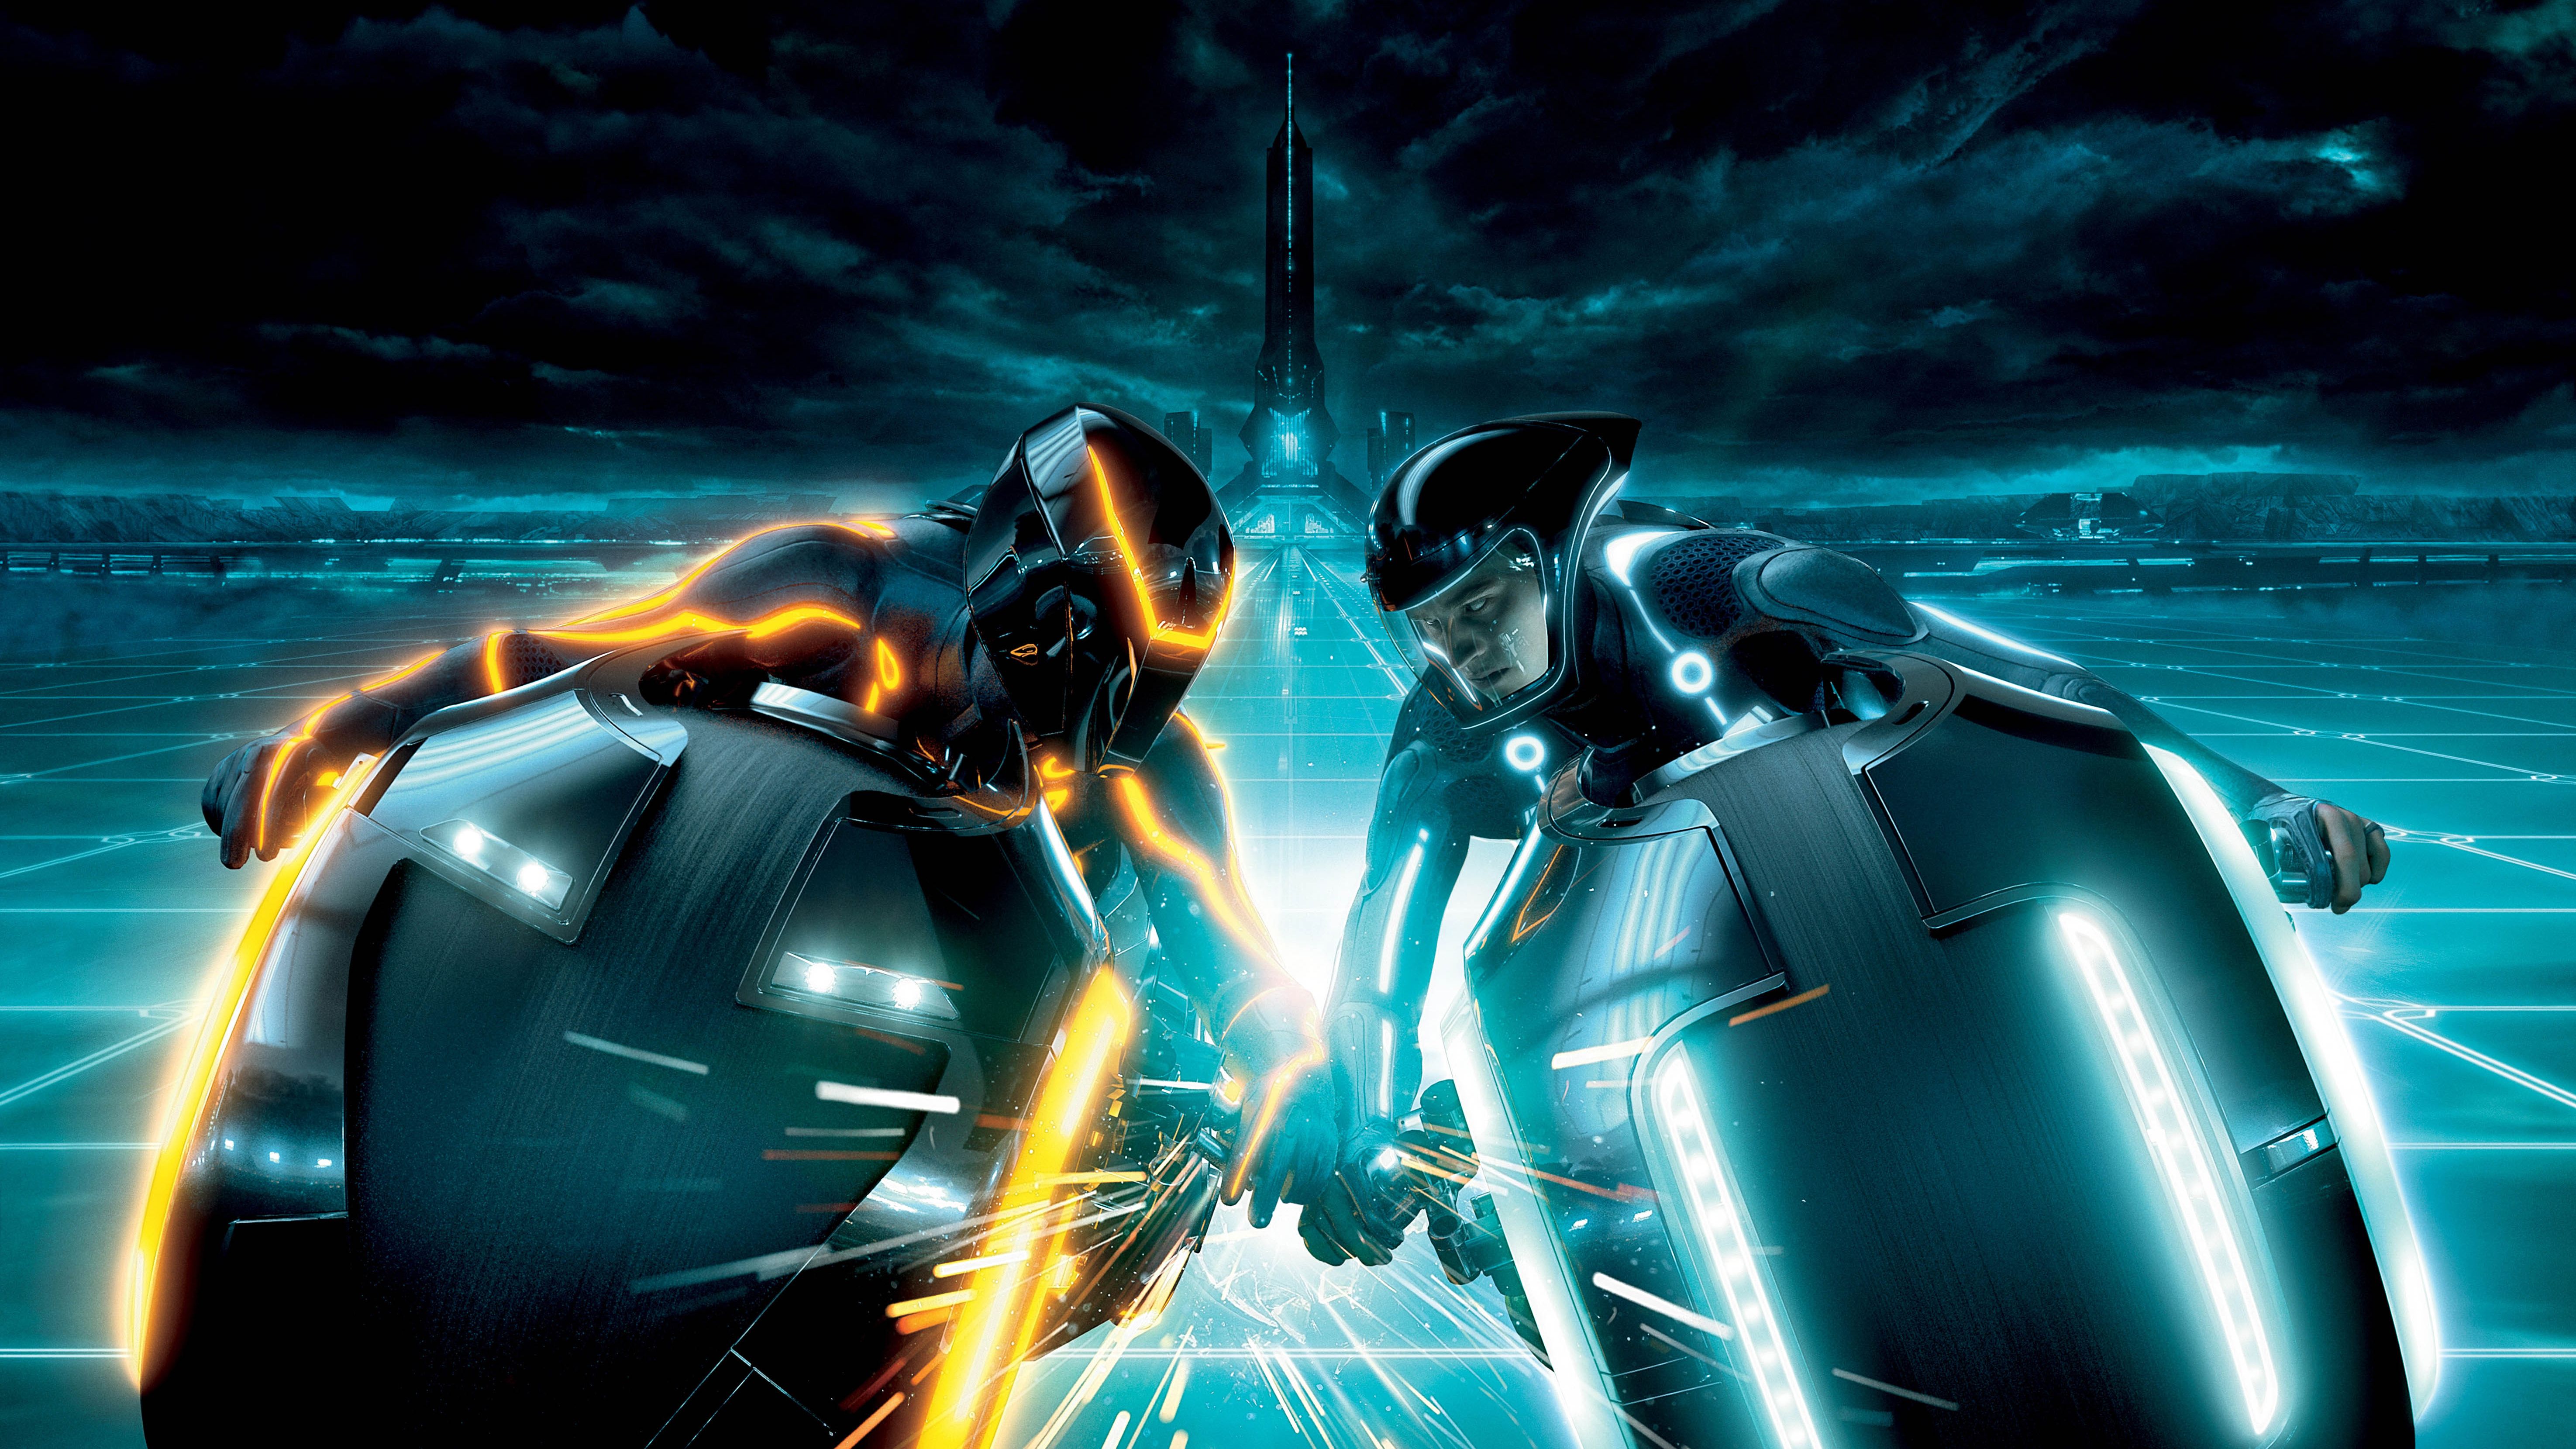 Tron Legacy 5k, HD Movies, 4k Wallpaper, Image, Background